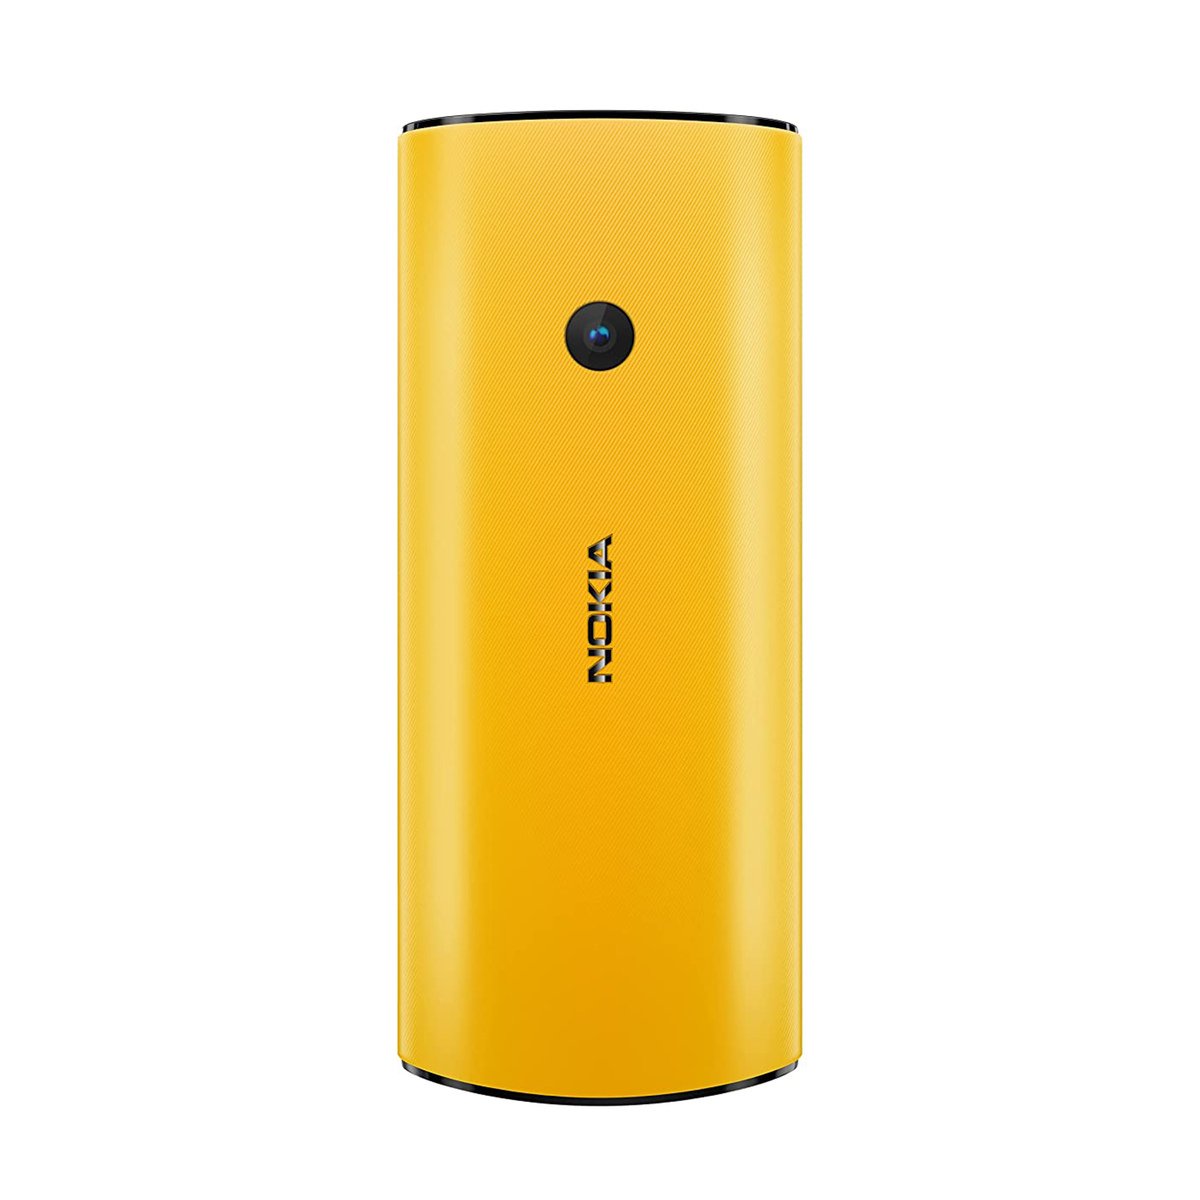 Nokia 110-TA1386 4G Dual Sim Yellow